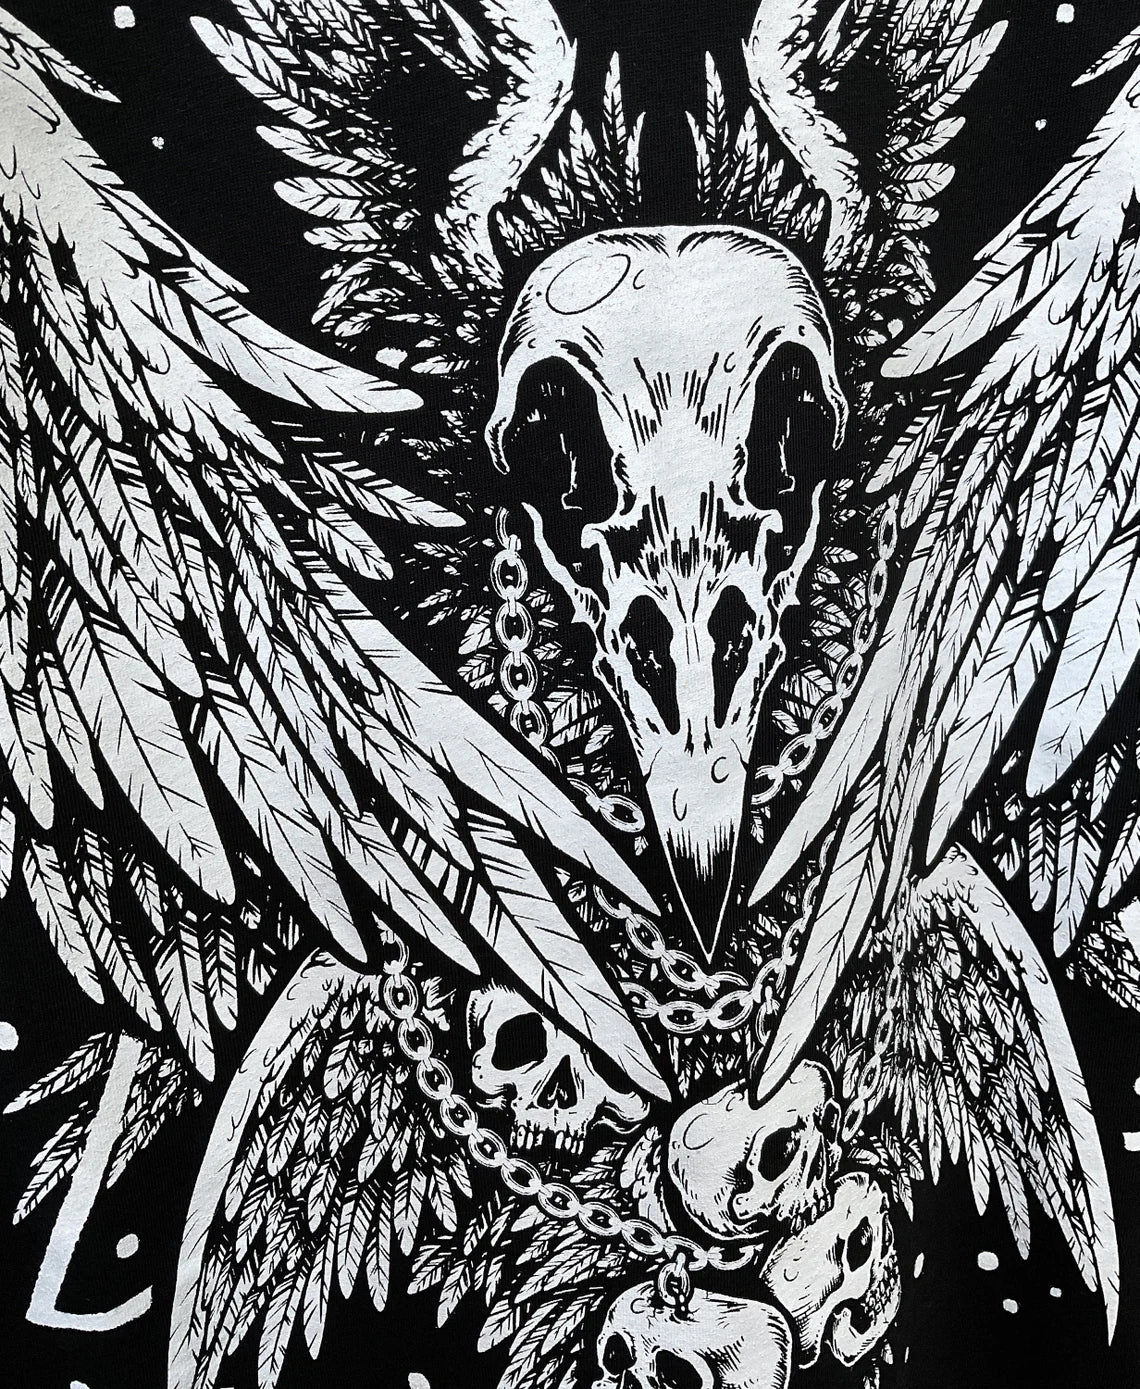 Gothic Bird Skull Seraphim T-shirt